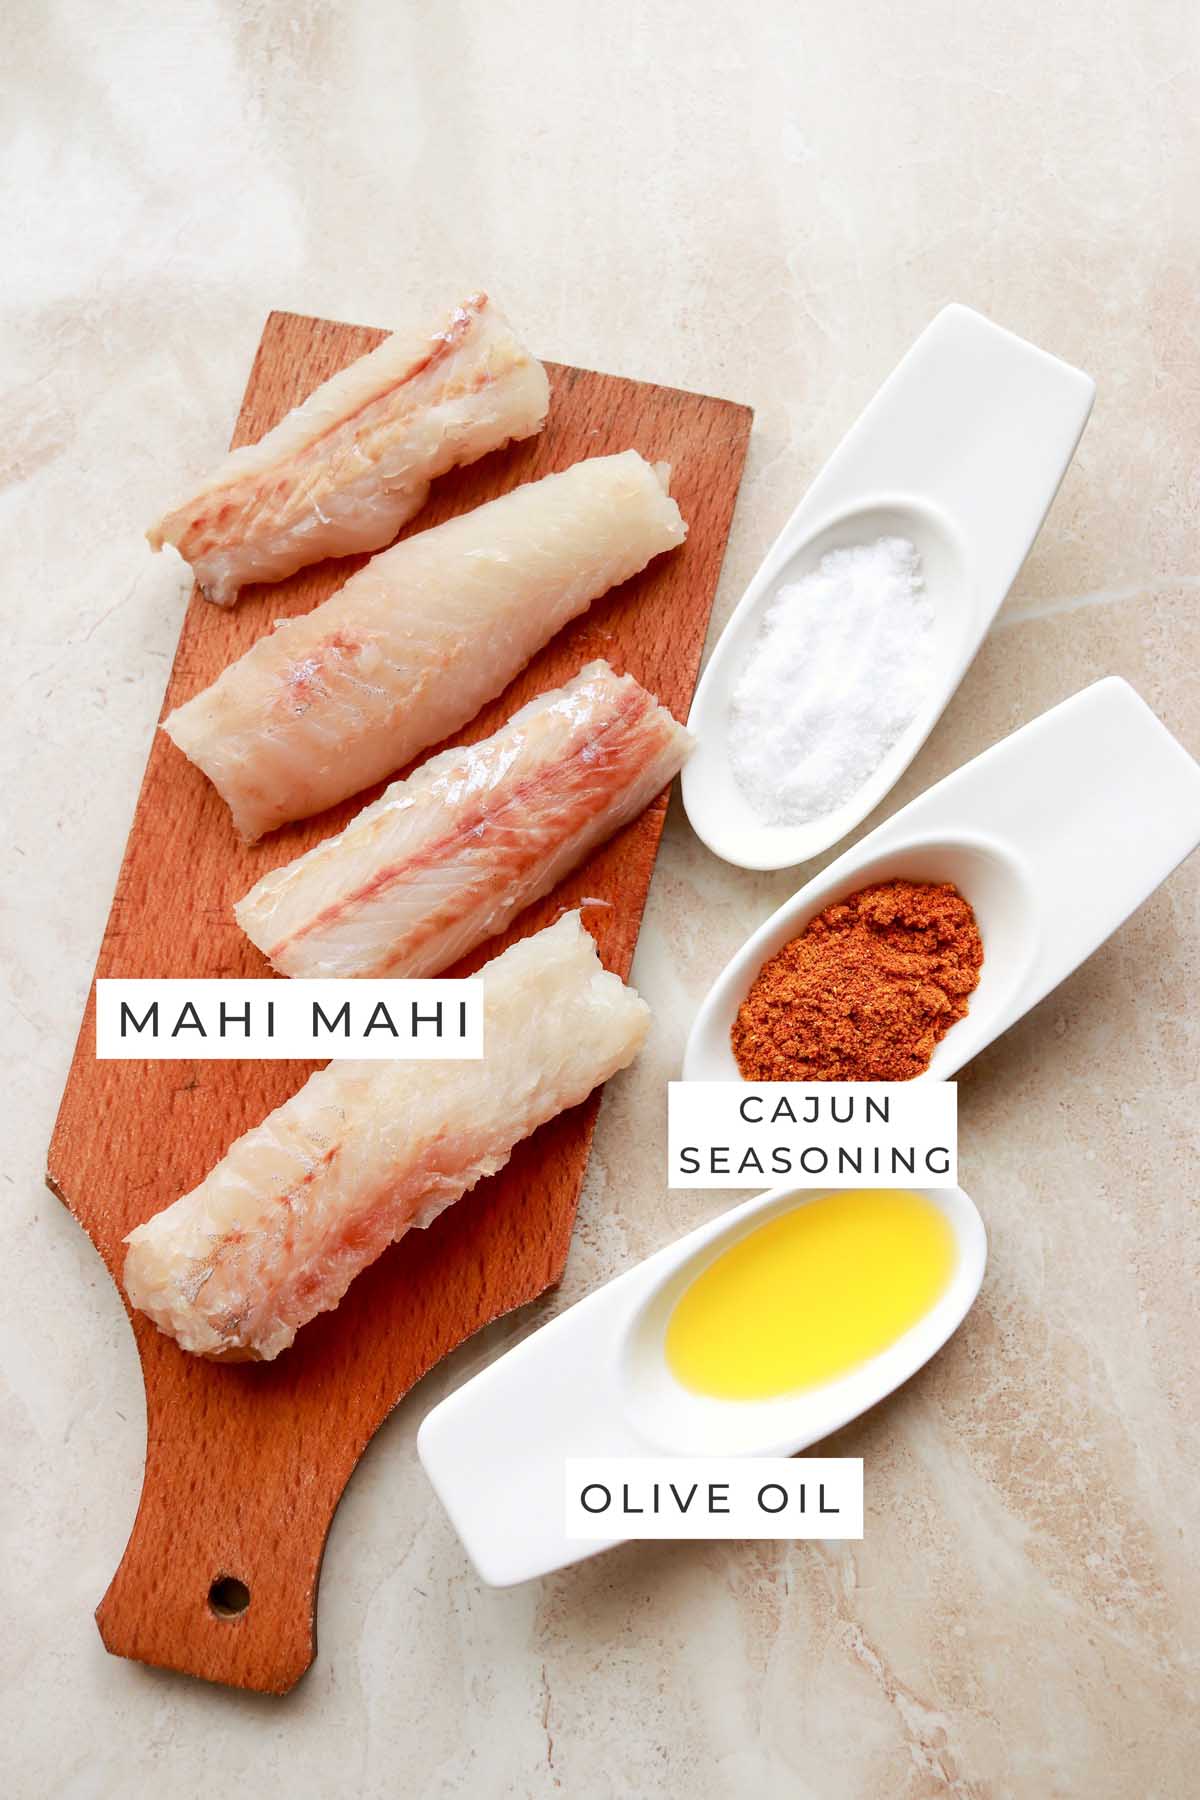 Labeled ingredients for the Mahi Mahi.